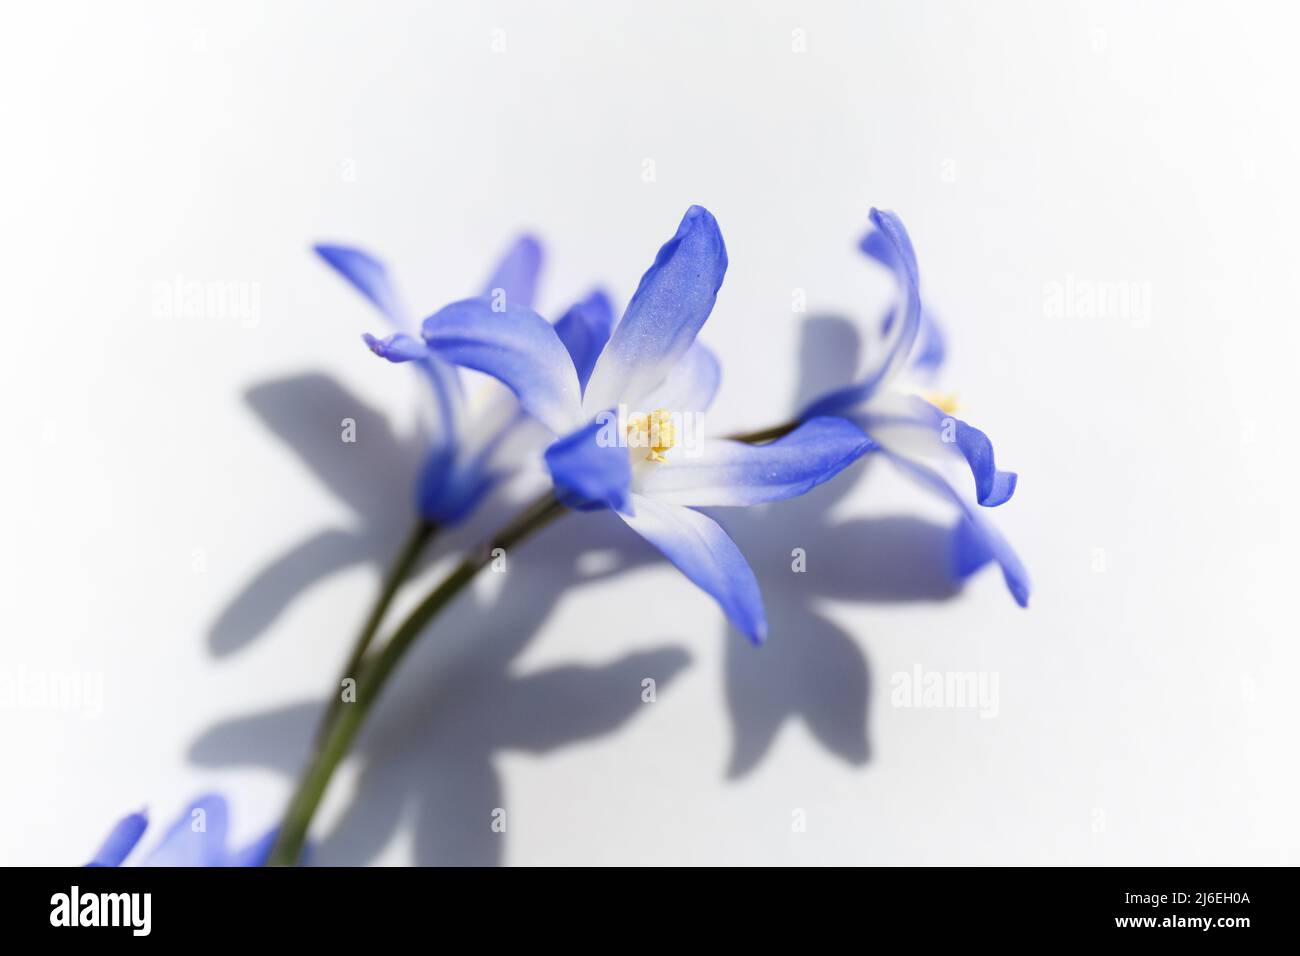 Chionodoxa. Closeup of blooming blue scilla luciliae flowers Stock Photo